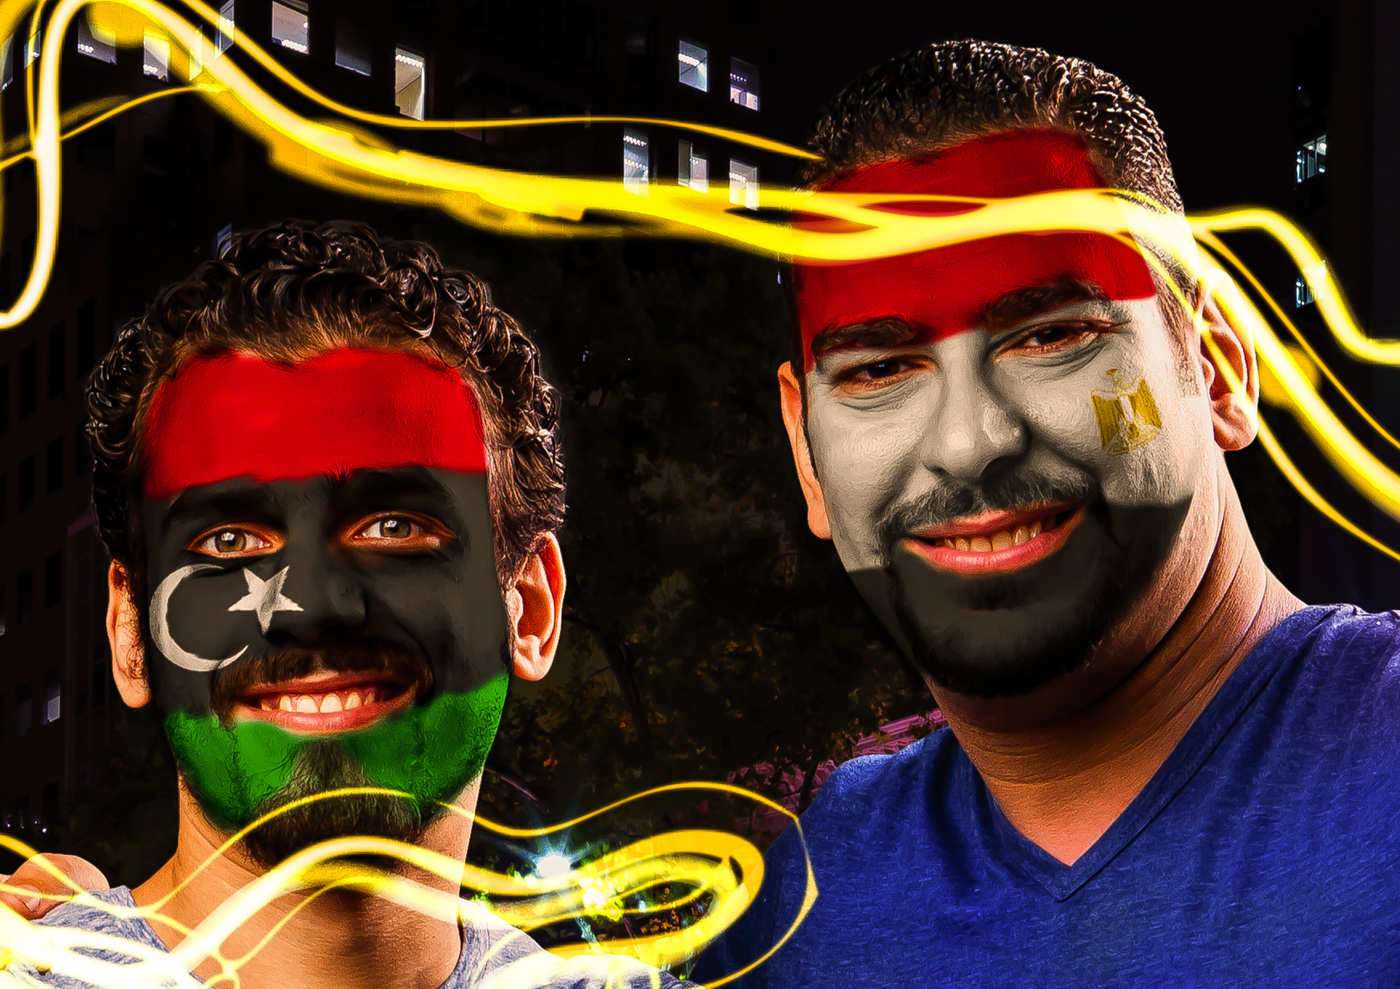 egypt arabs Danone light flags retouch effect design compositing manipulation